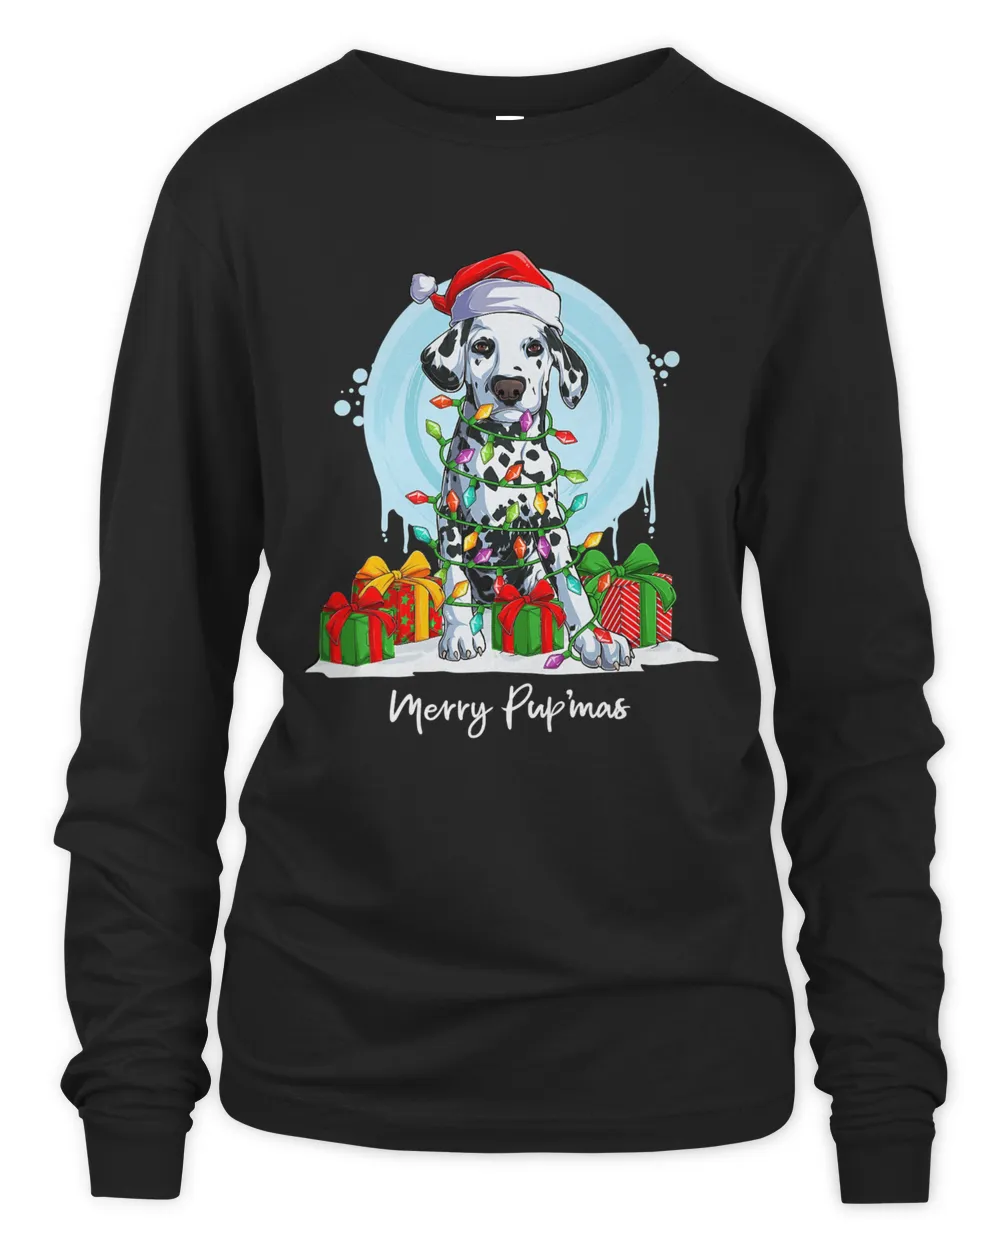 Merry Pup'mas, Dalmation Dog, Christmas Tree T-Shirt